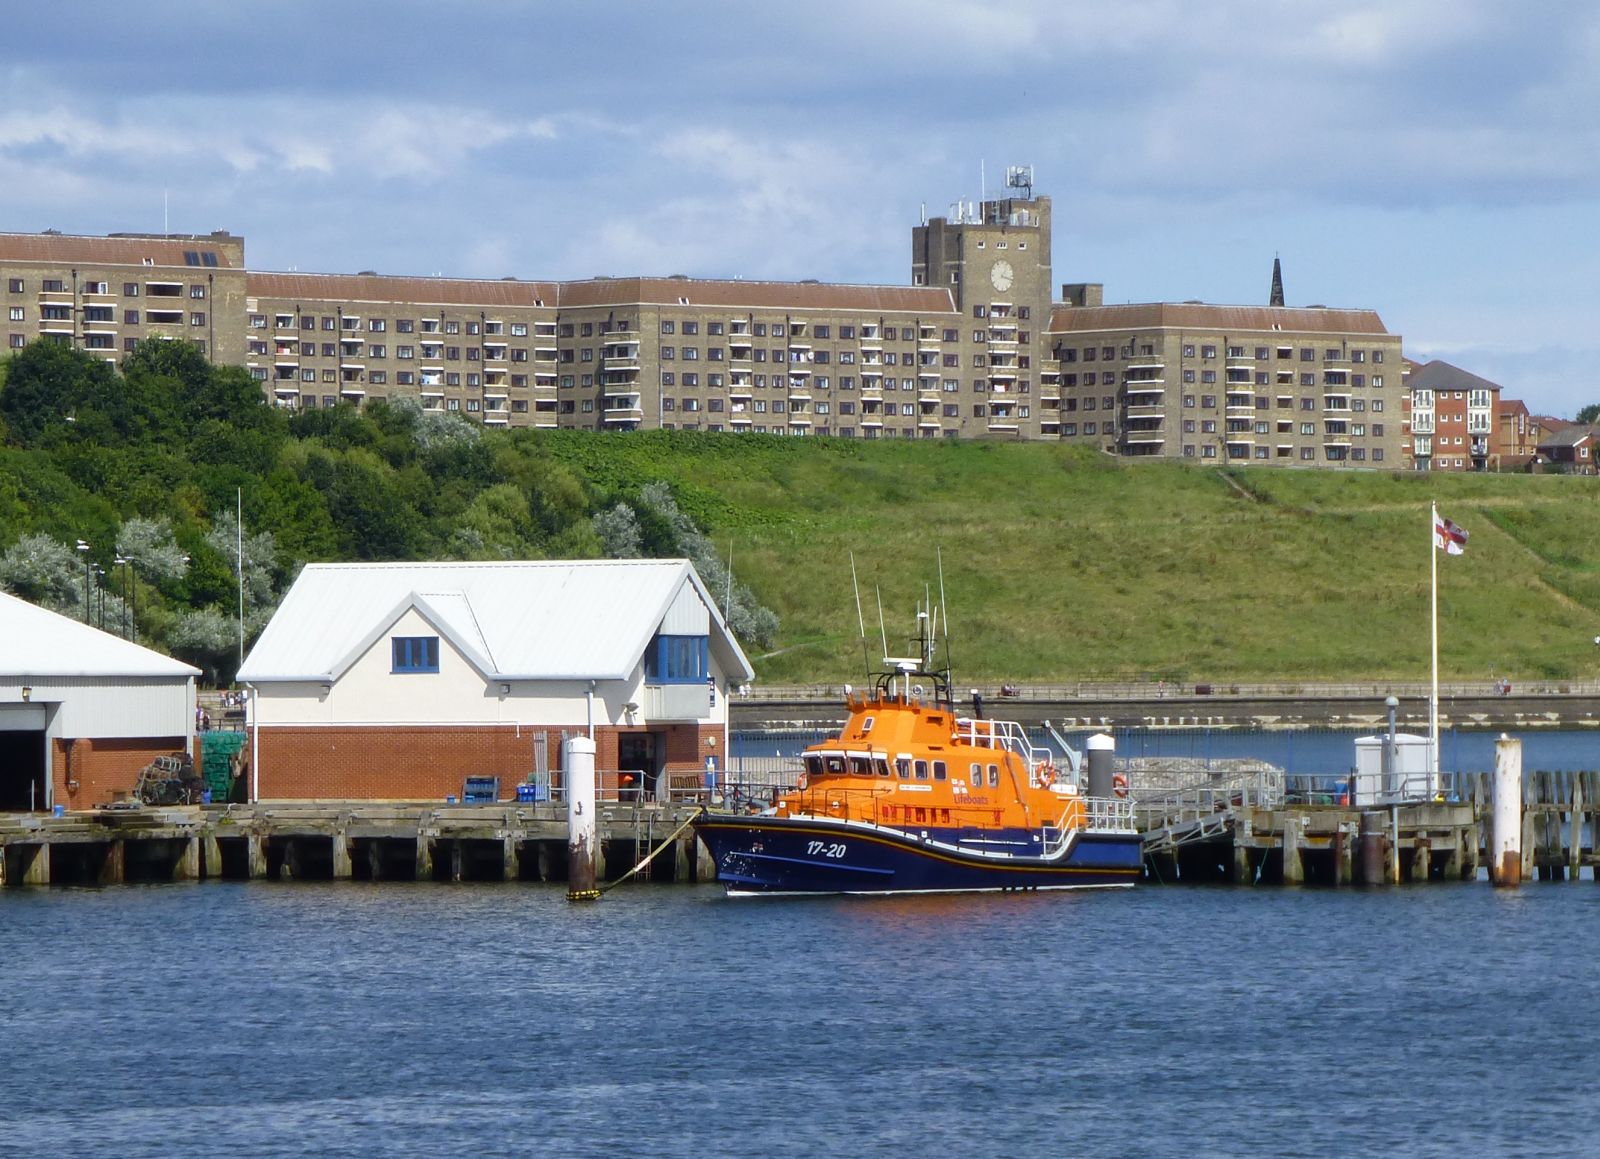 Tynemouth Lifeboat Station